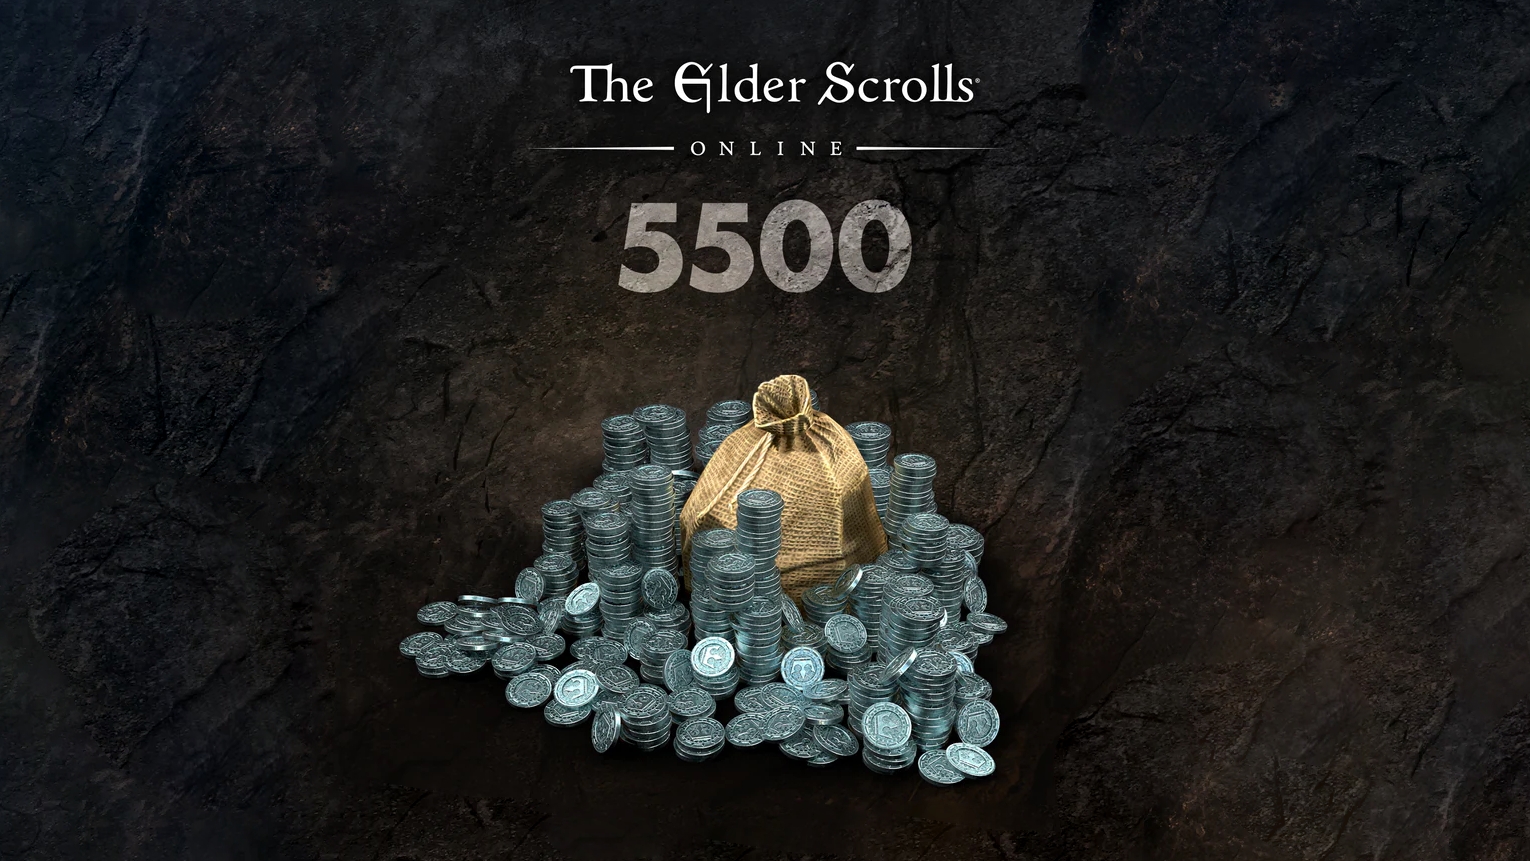 The Elder Scrolls Online: Tamriel Unlimited - 5500 Crowns XBOX One CD Key 35.02 $